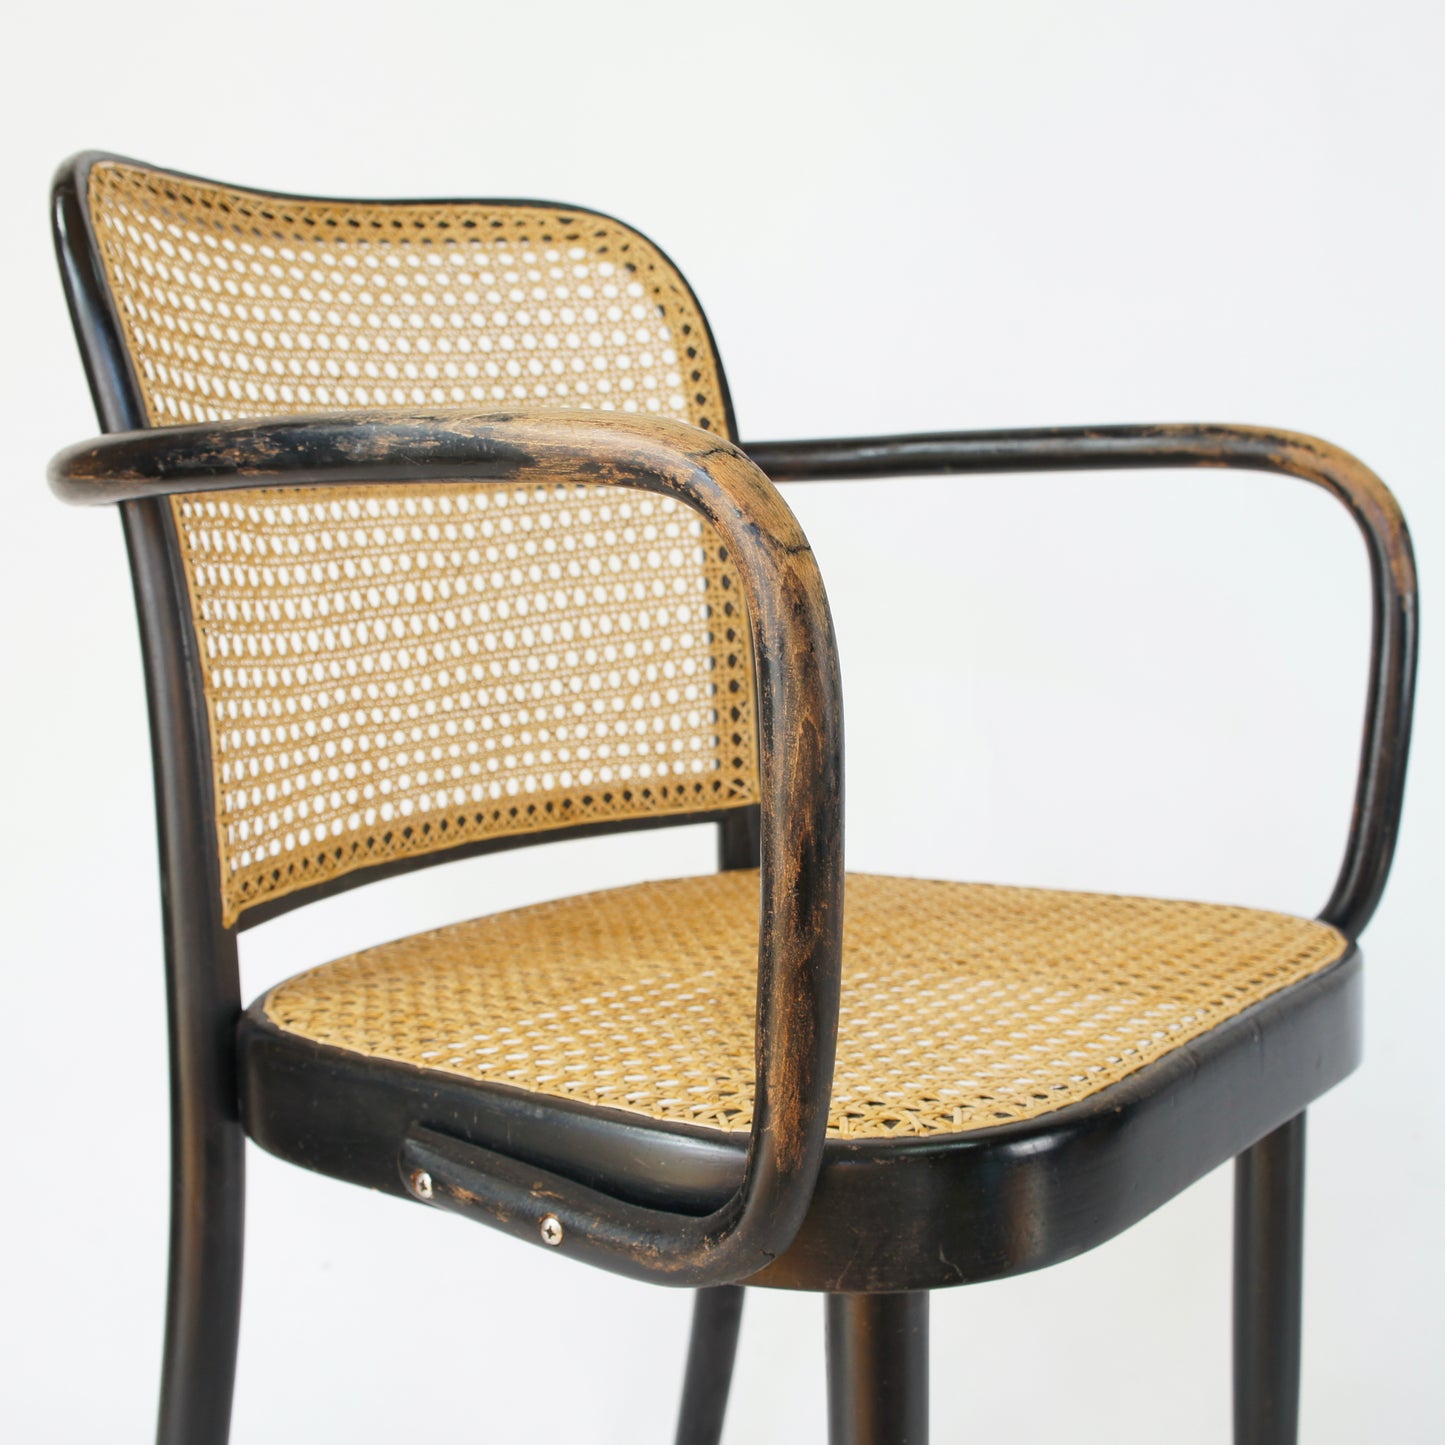 811 Chair by Josef Hoffman